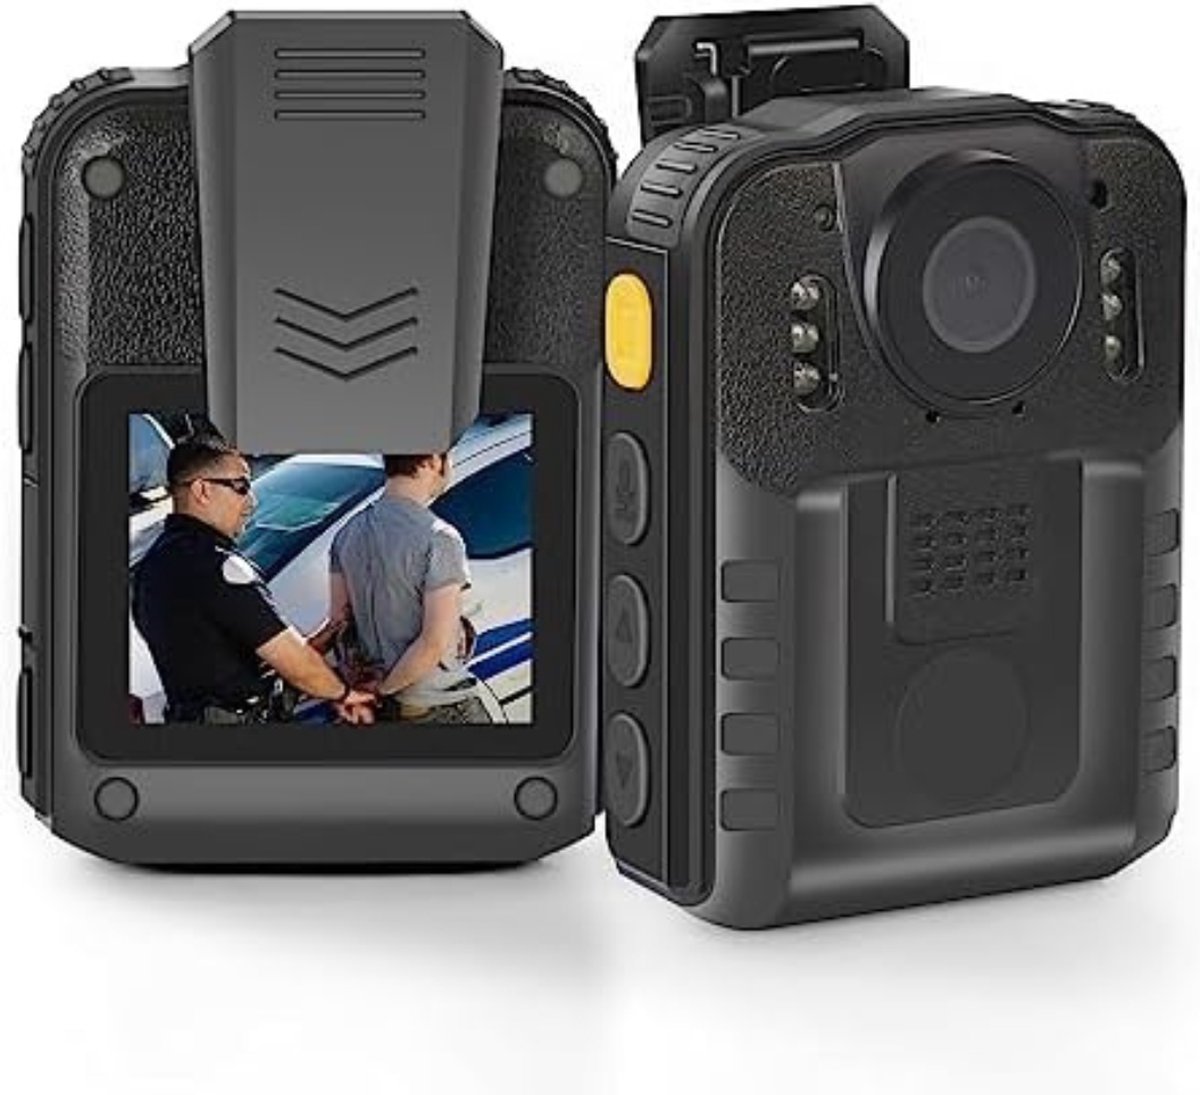 Bodycam - Bodycam Politie - Body Cam - Body Camera